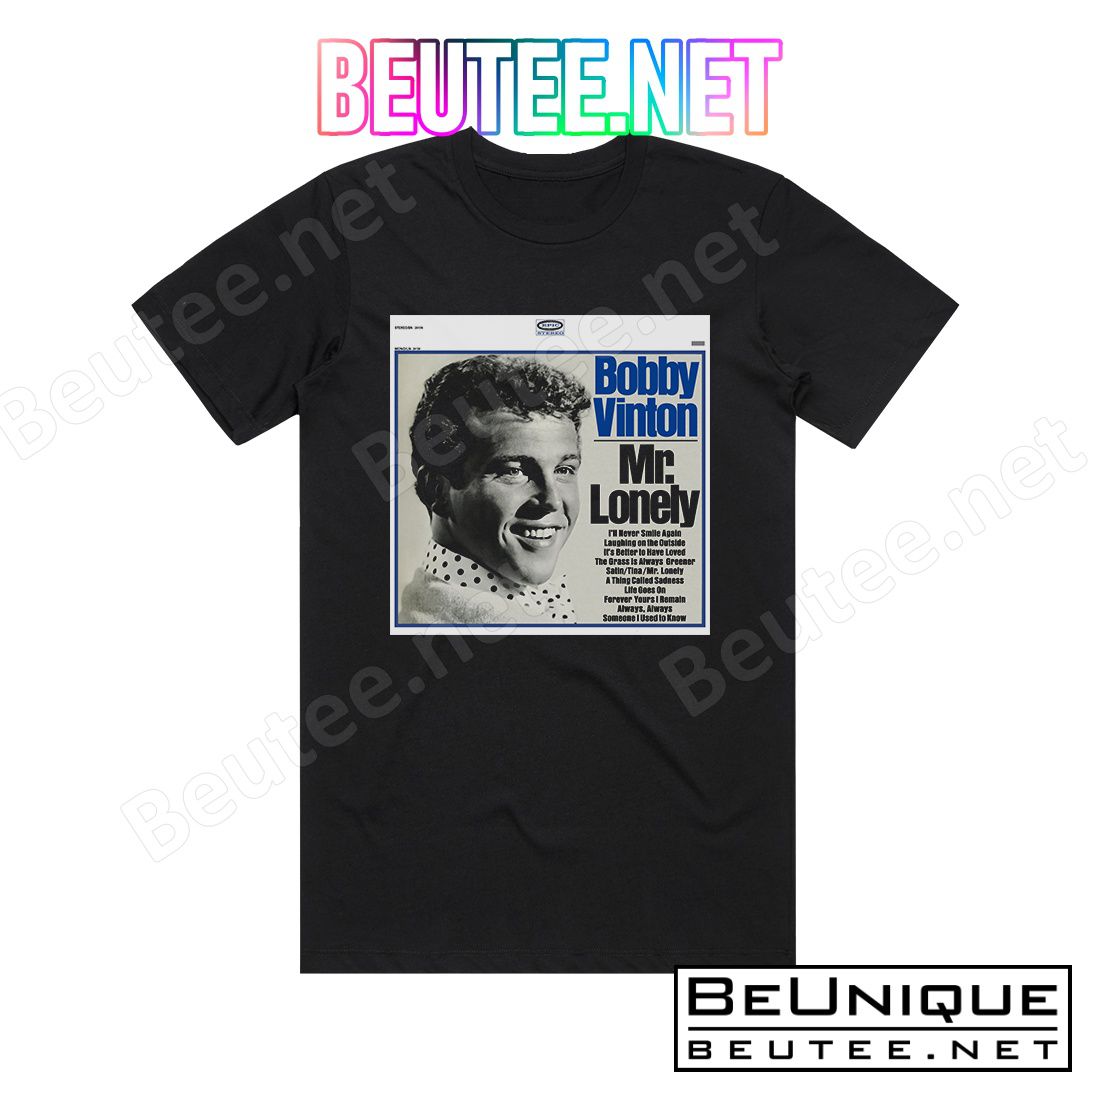 Bobby Vinton Mr Lonely Album Cover T-Shirt